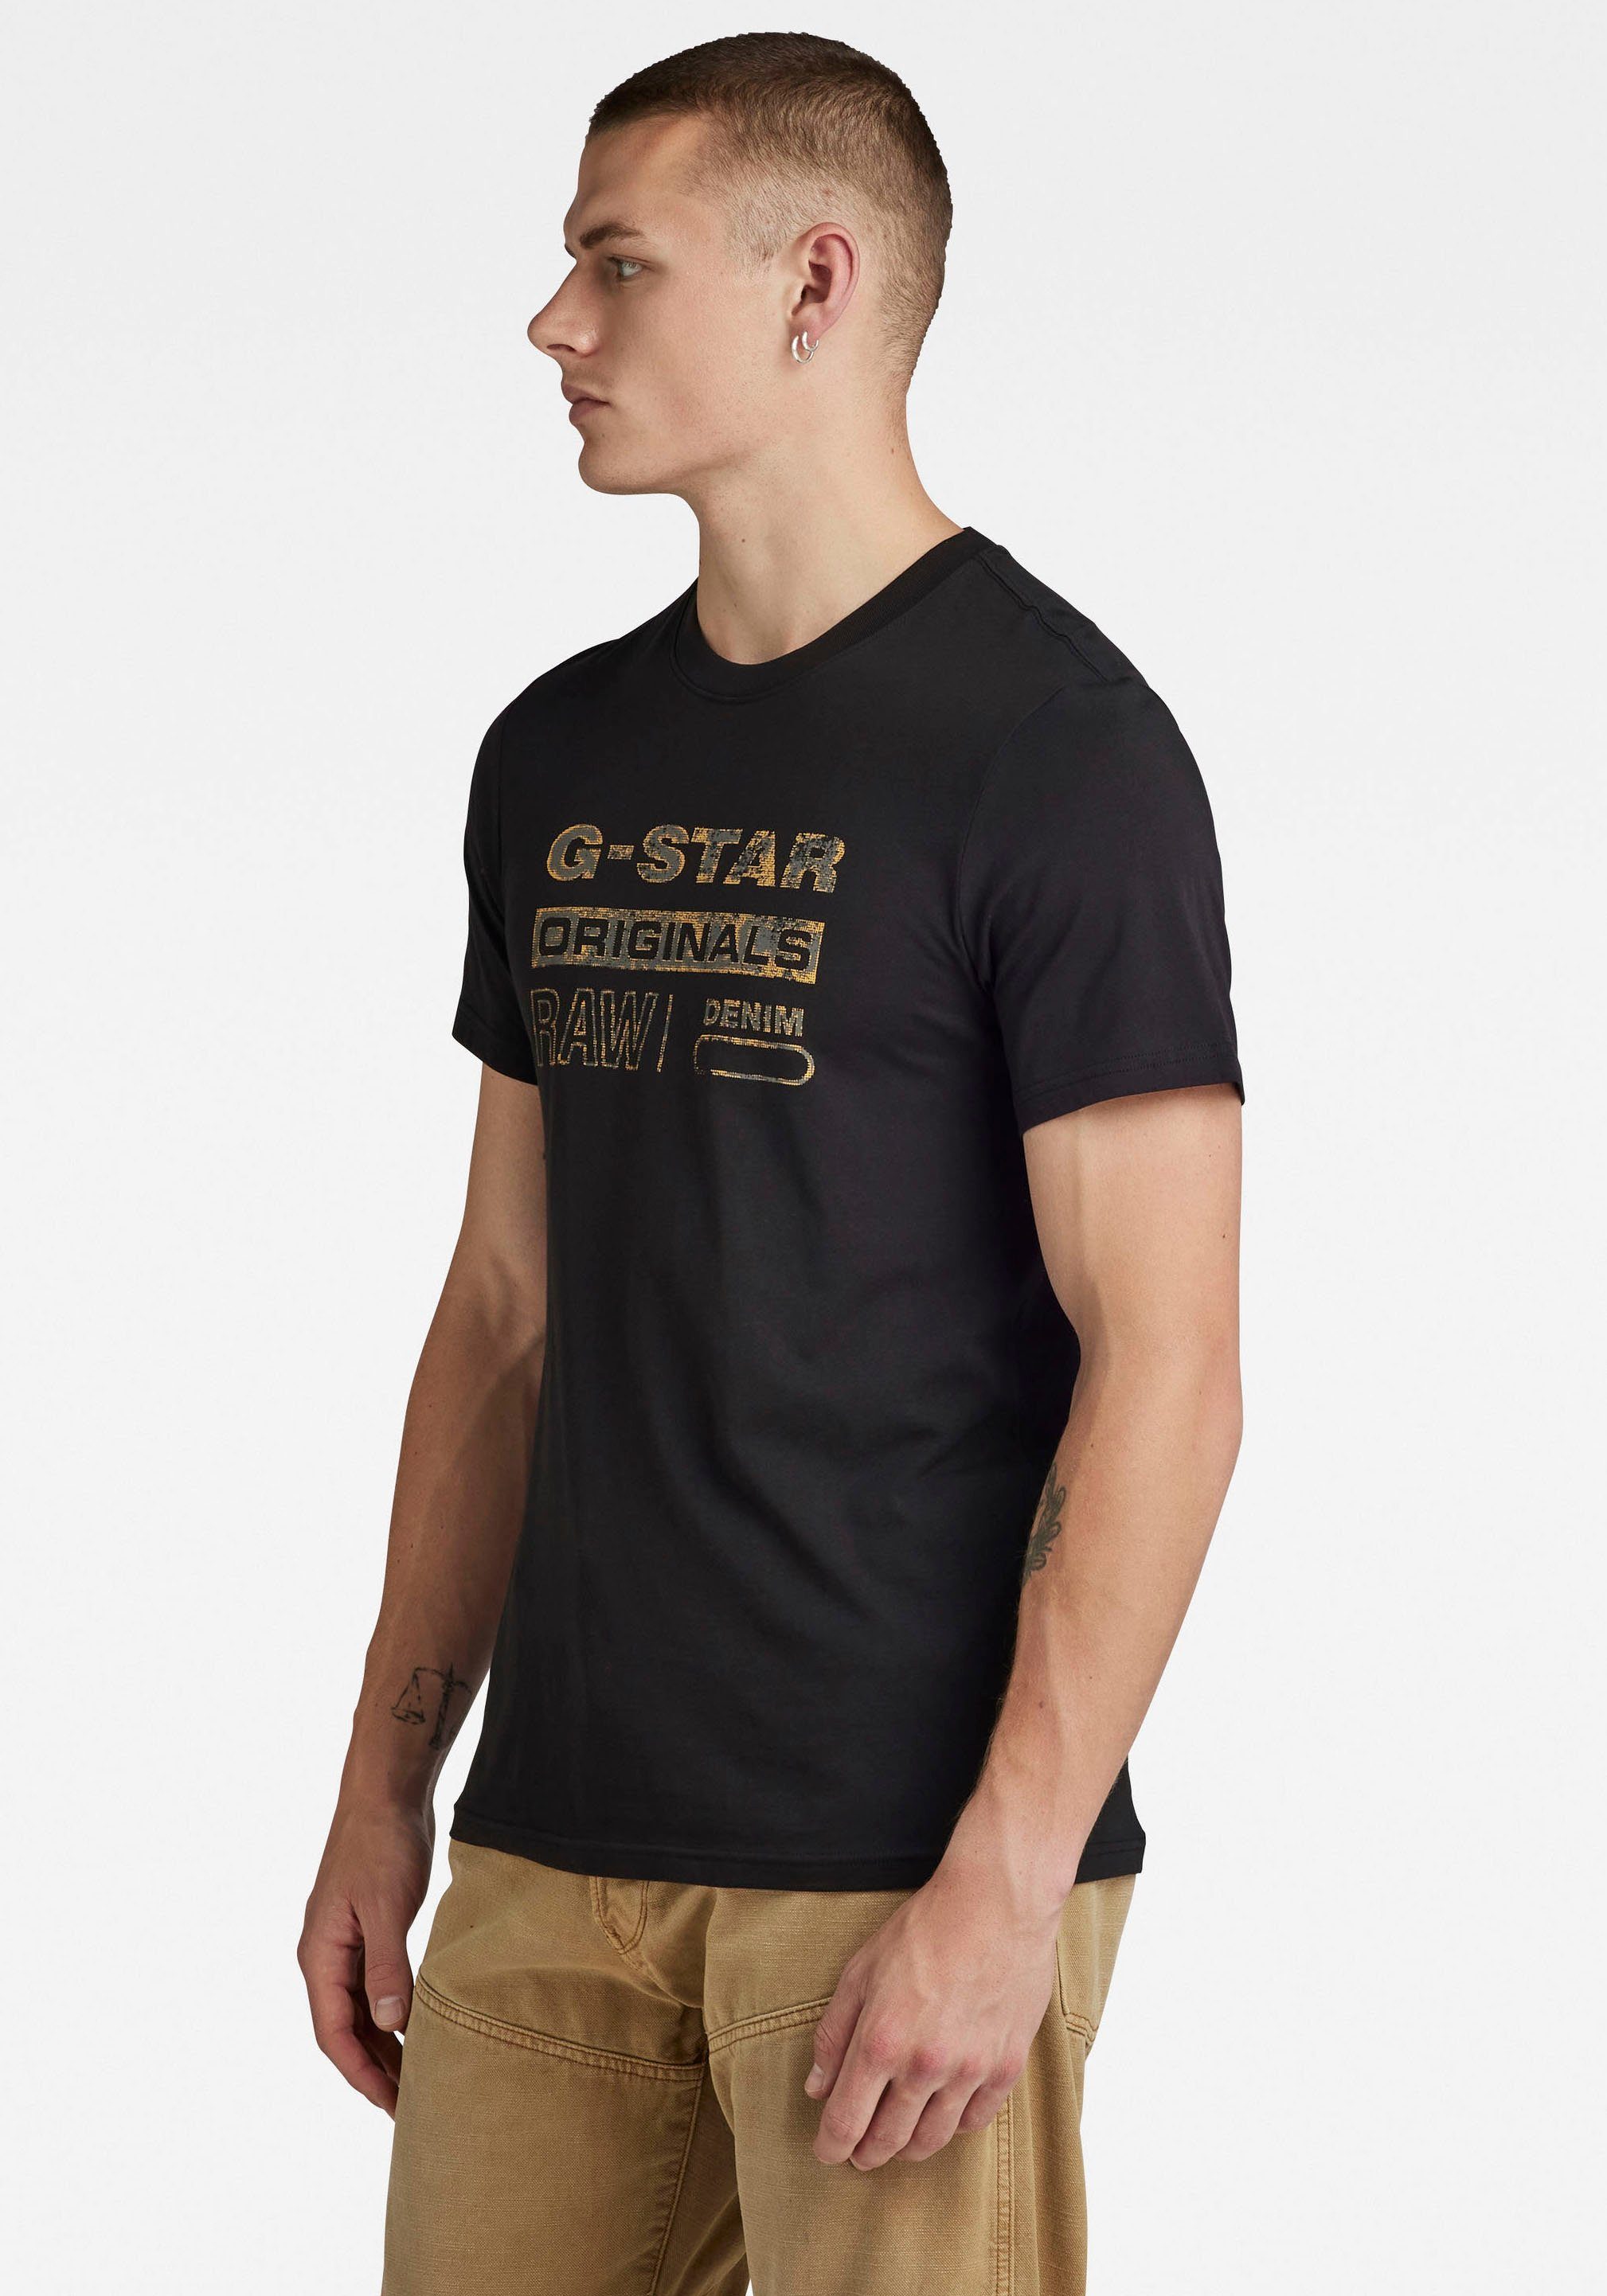 G-Star RAW T-shirt Distressed originals